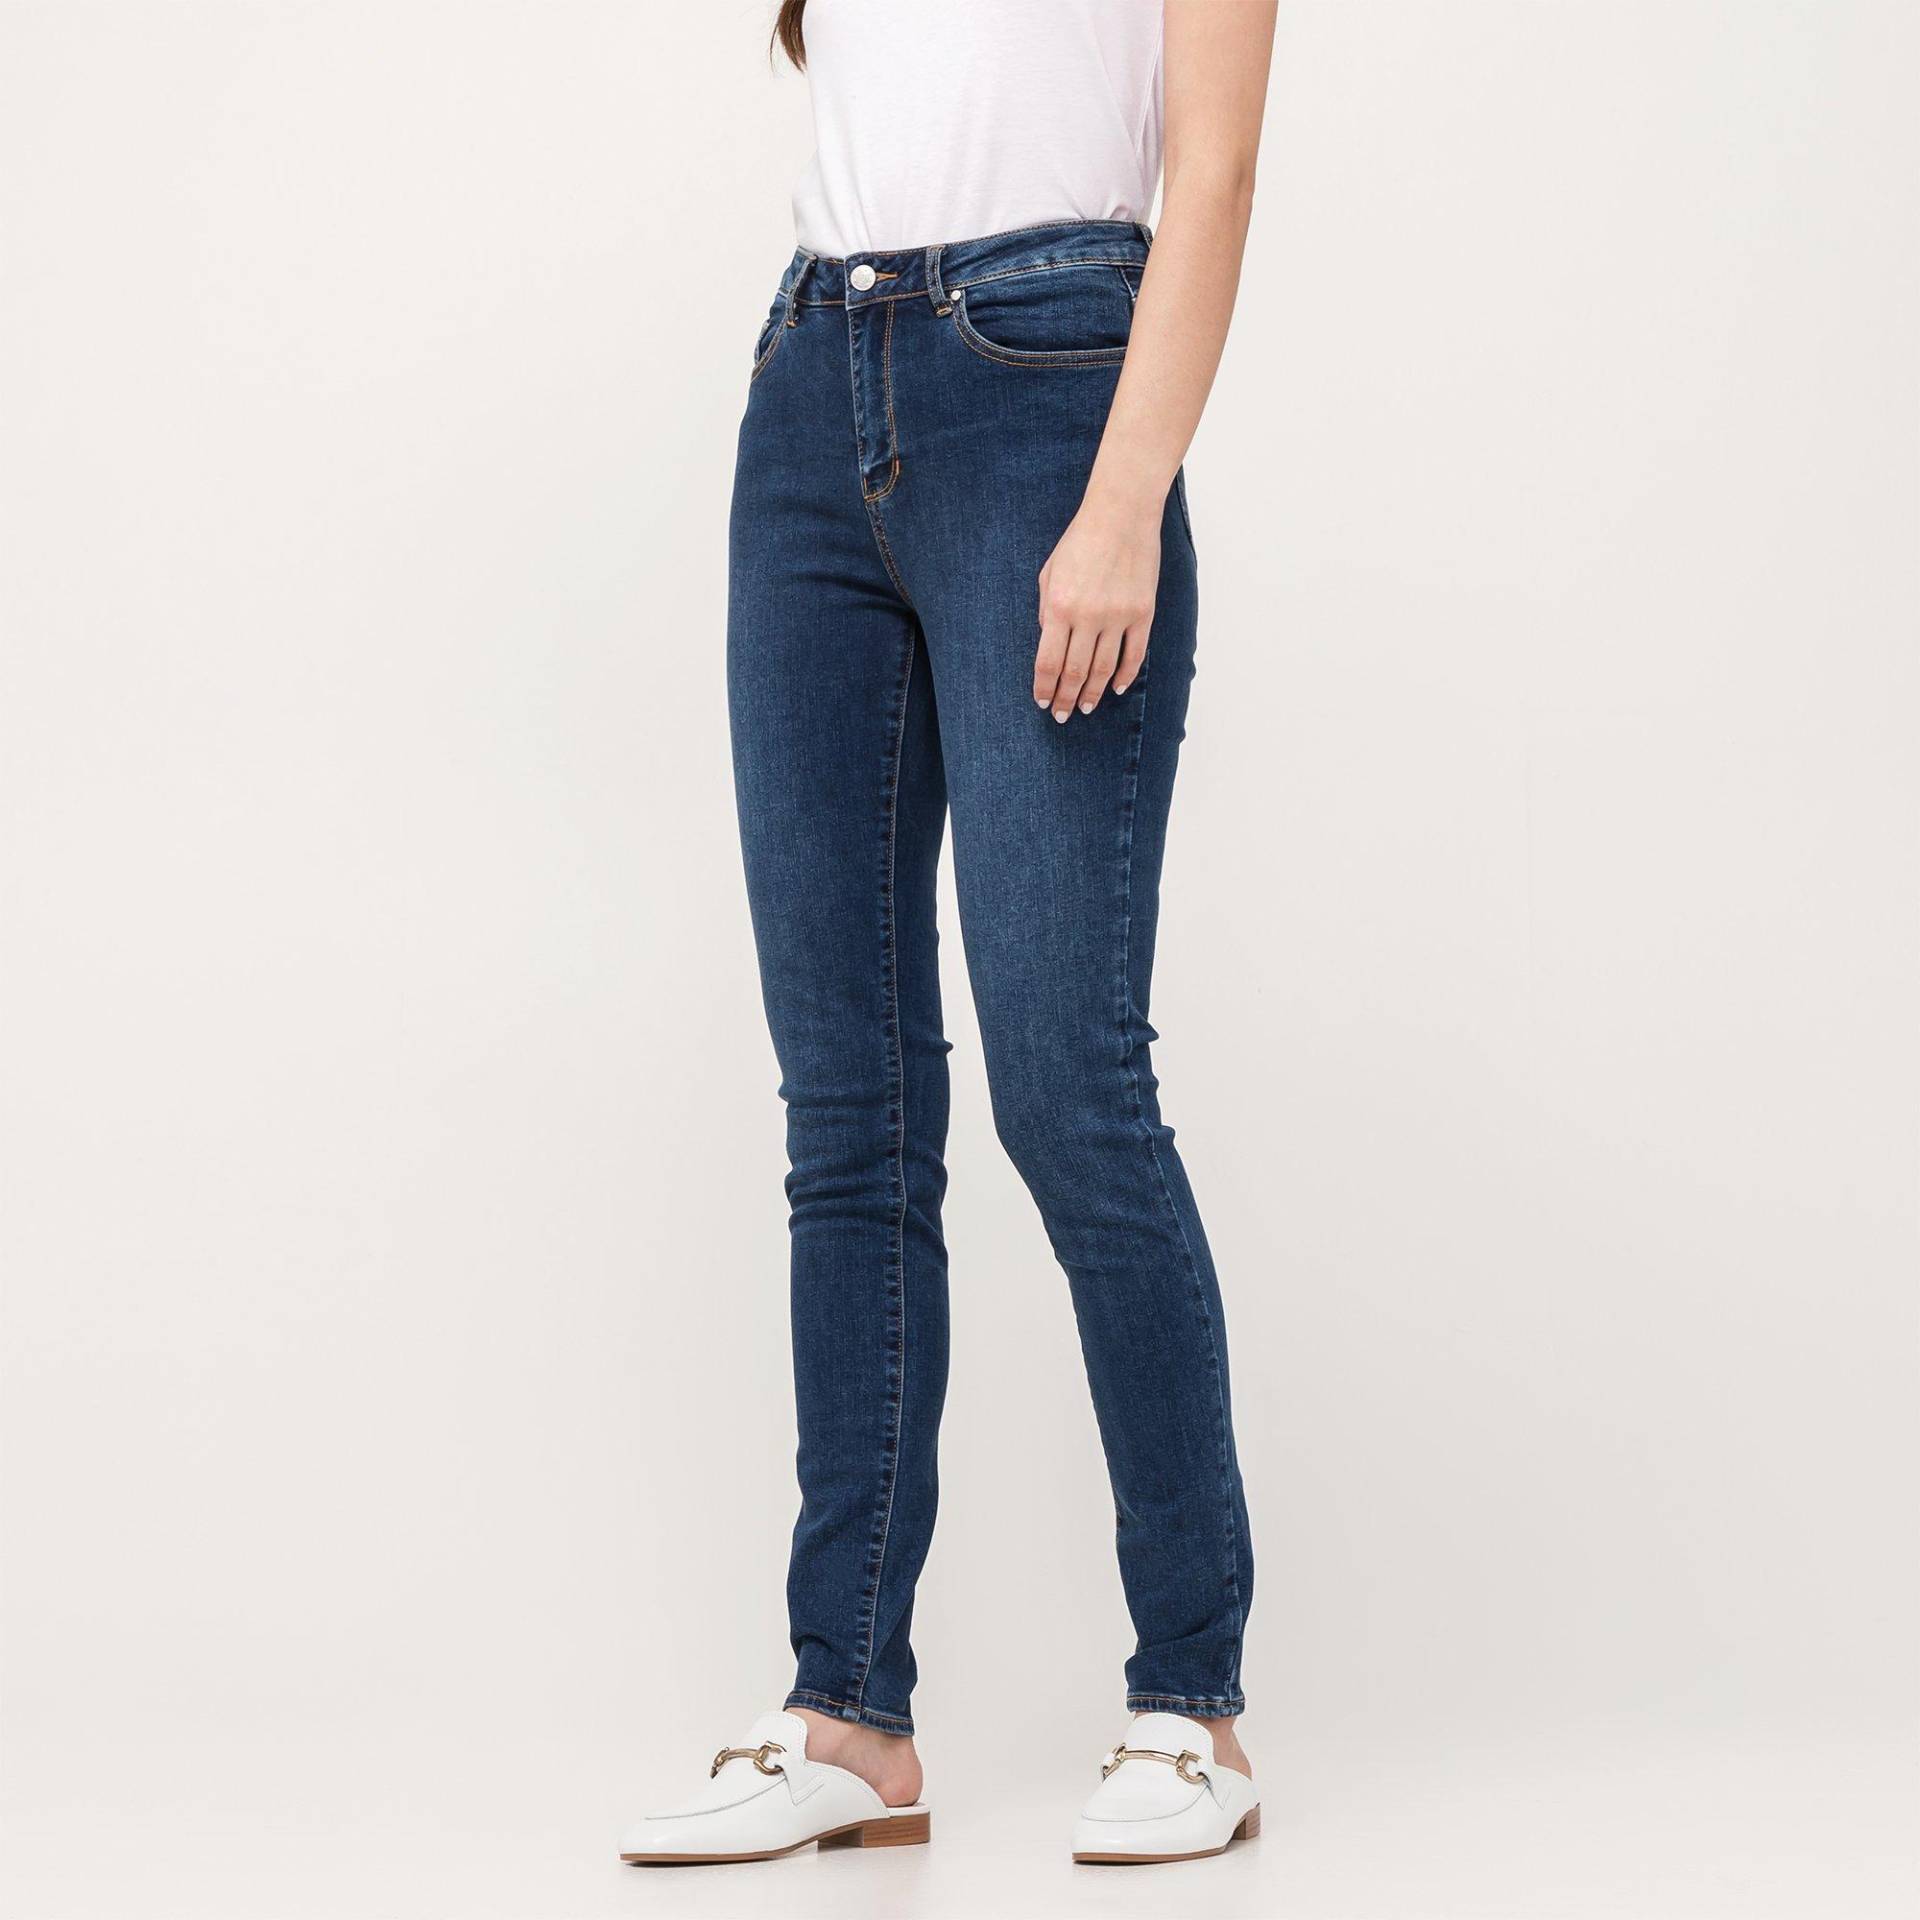 Jeans, Slim Fit Damen Blau Denim L30/W44 von Manor Woman